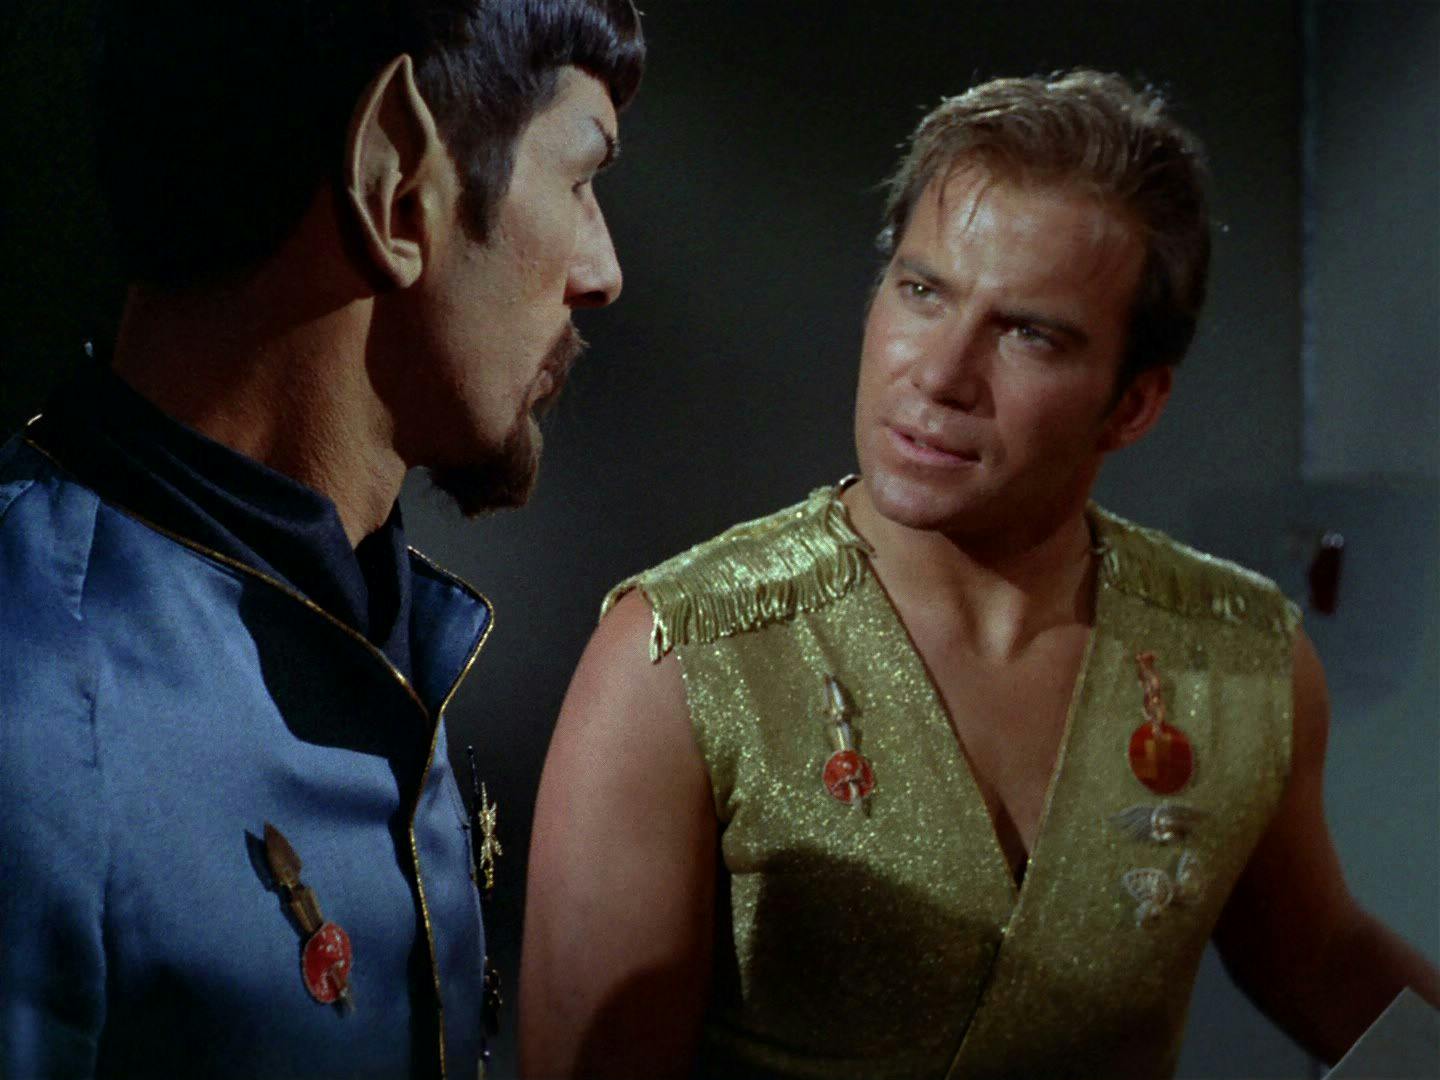 Captain Kirk (The Original Series) addresses Mirror Universe Spock. Both men are in their Mirror Universe uniforms.